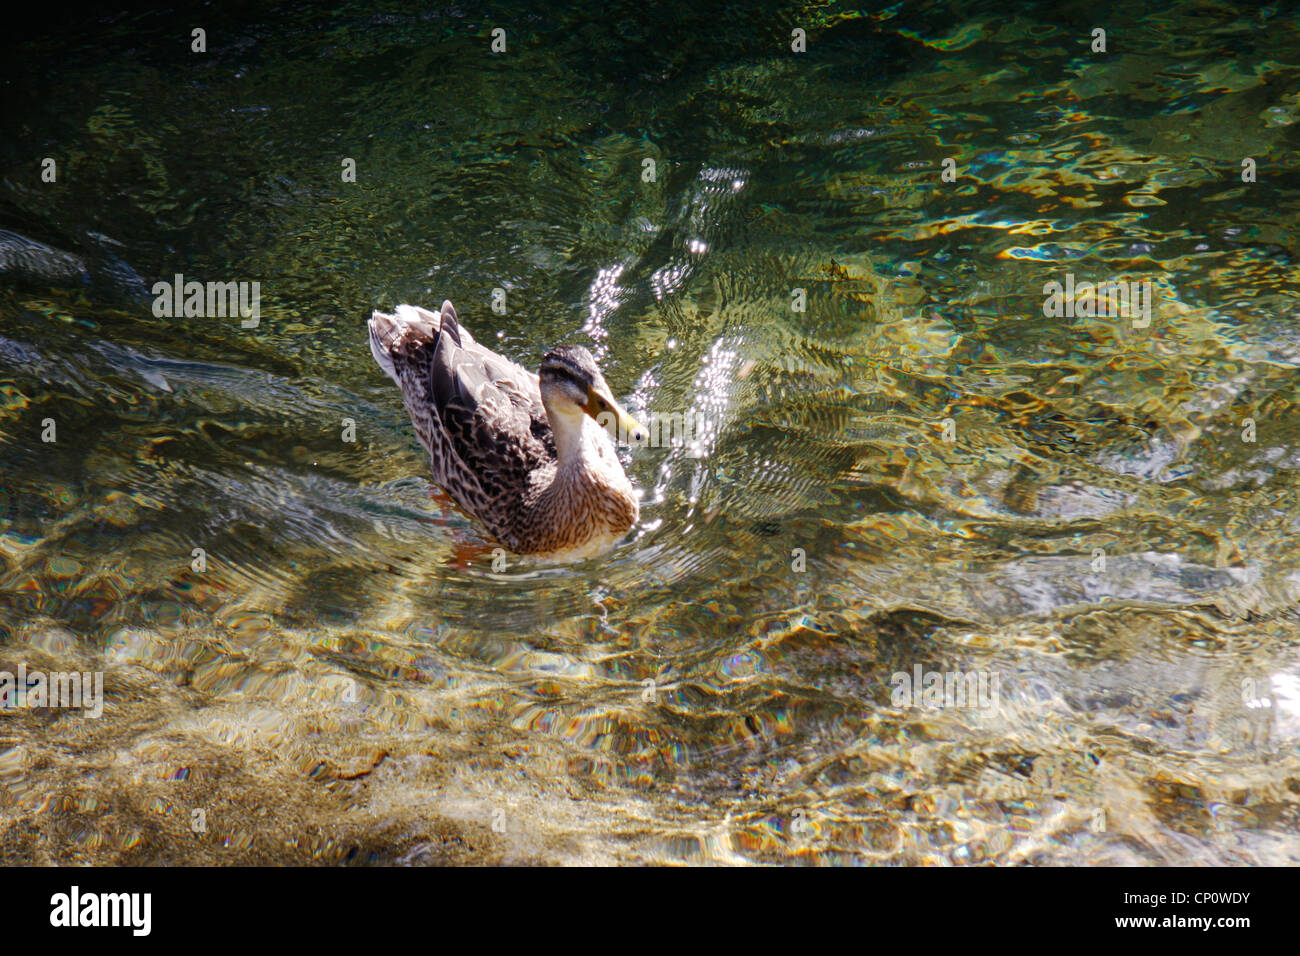 Mandarin duck at downstream of the Crystal pool, Riwaka Resurgence. Stock Photo